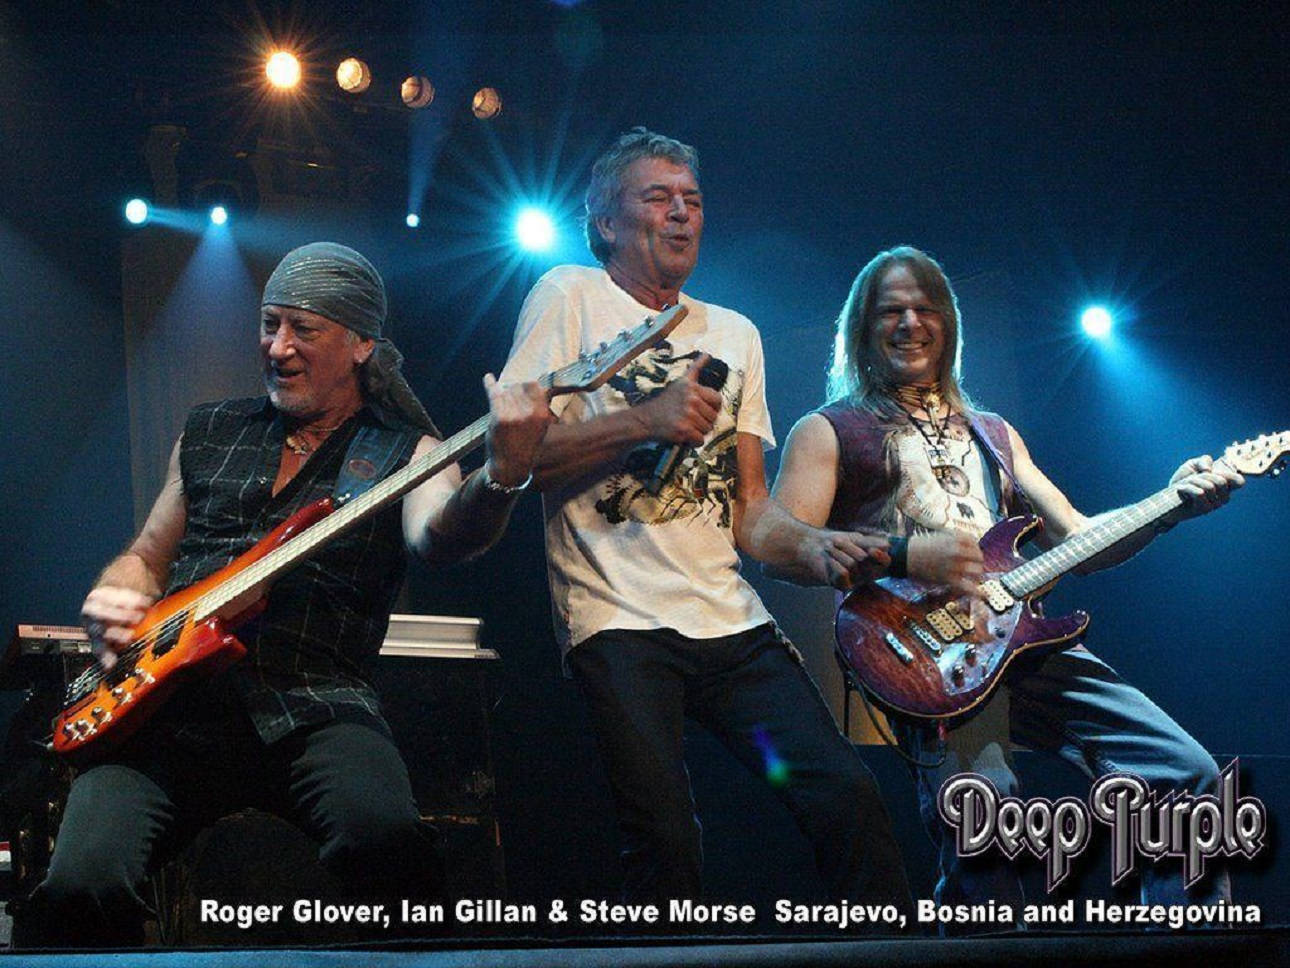 Deutschehard Rock Band Deep Purple Mailand 2009 Wallpaper